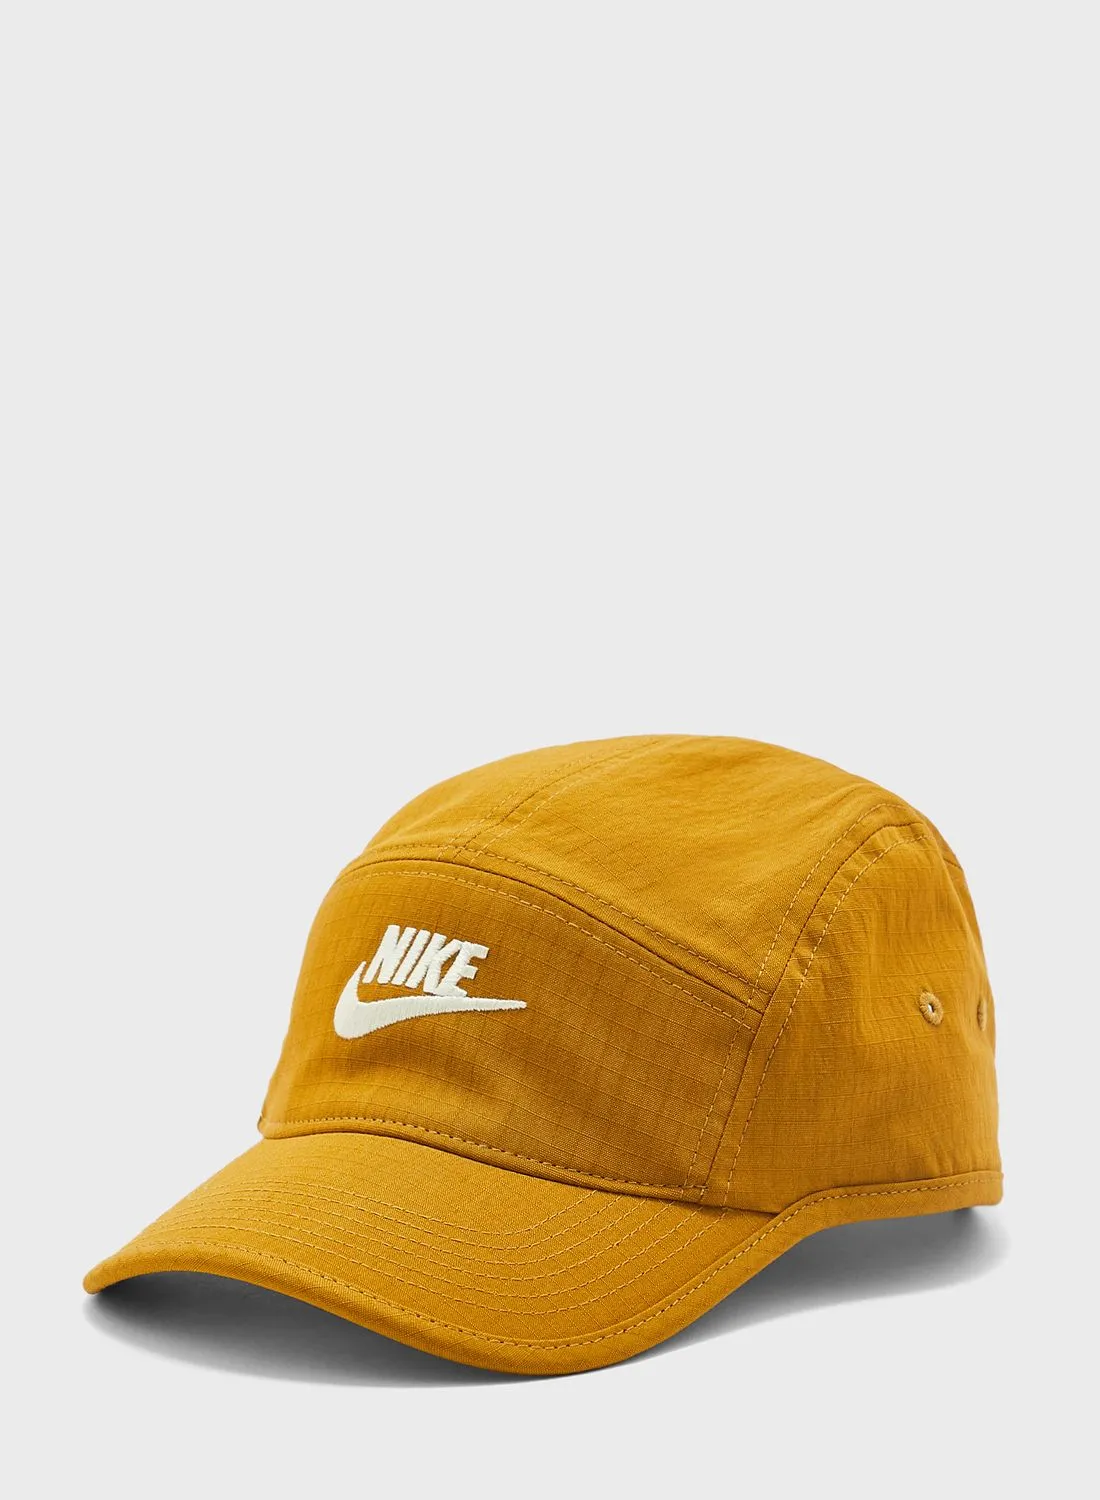 Nike Fly Color Block Cap